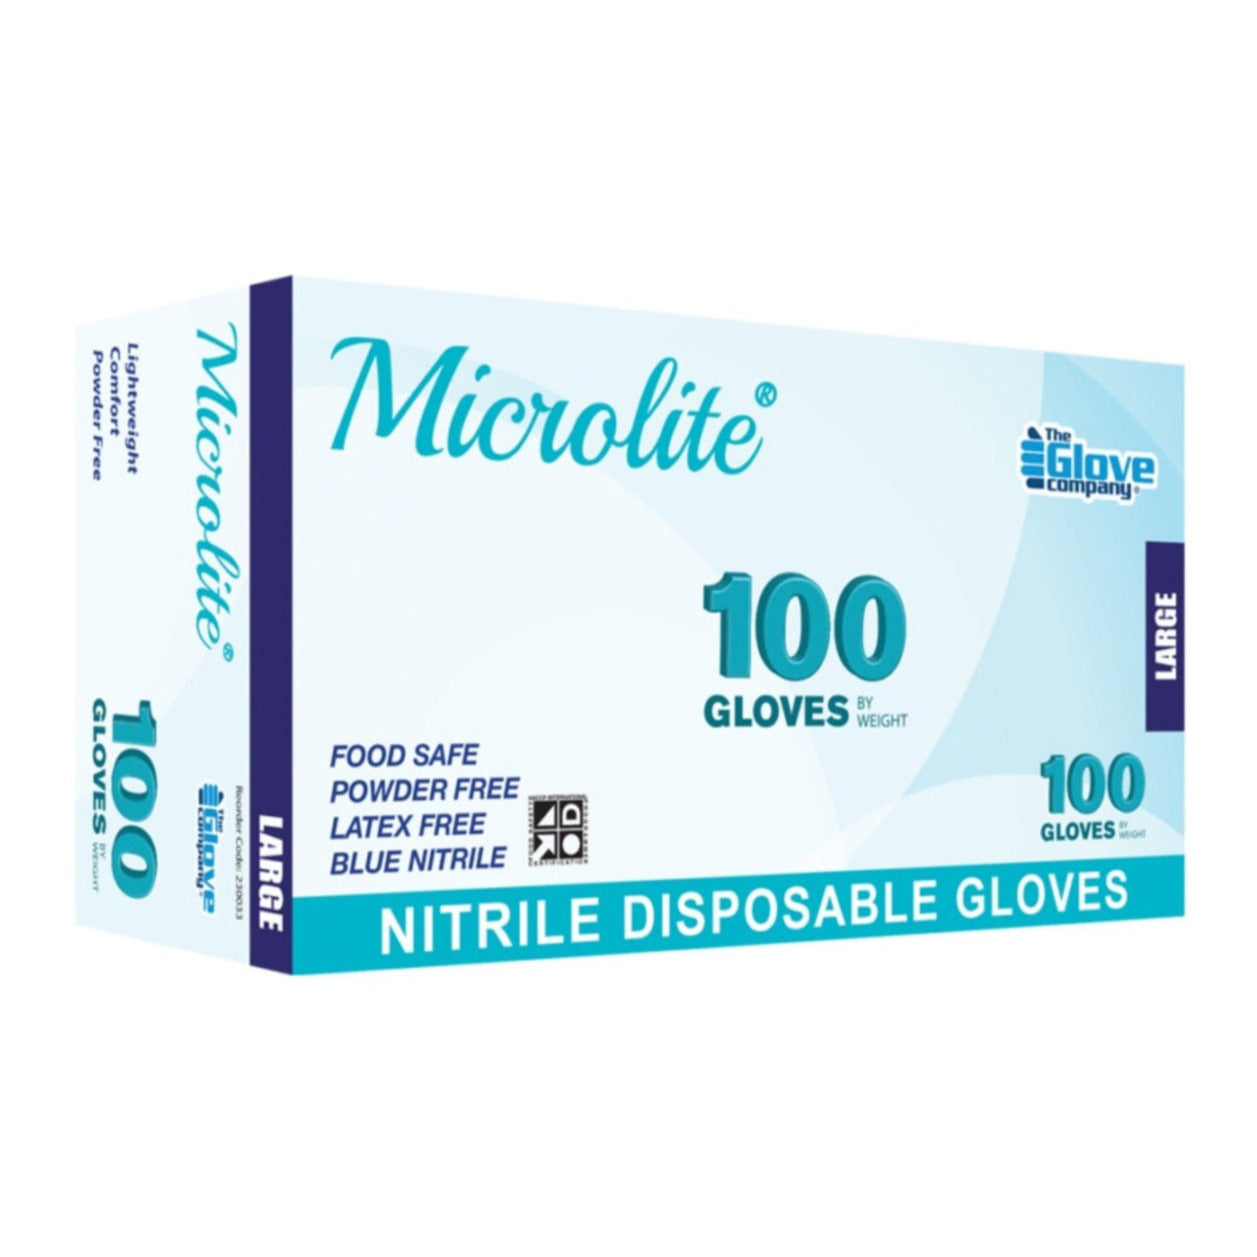 TGC Microlite® Nitrile Disposable Gloves (100pcs)  